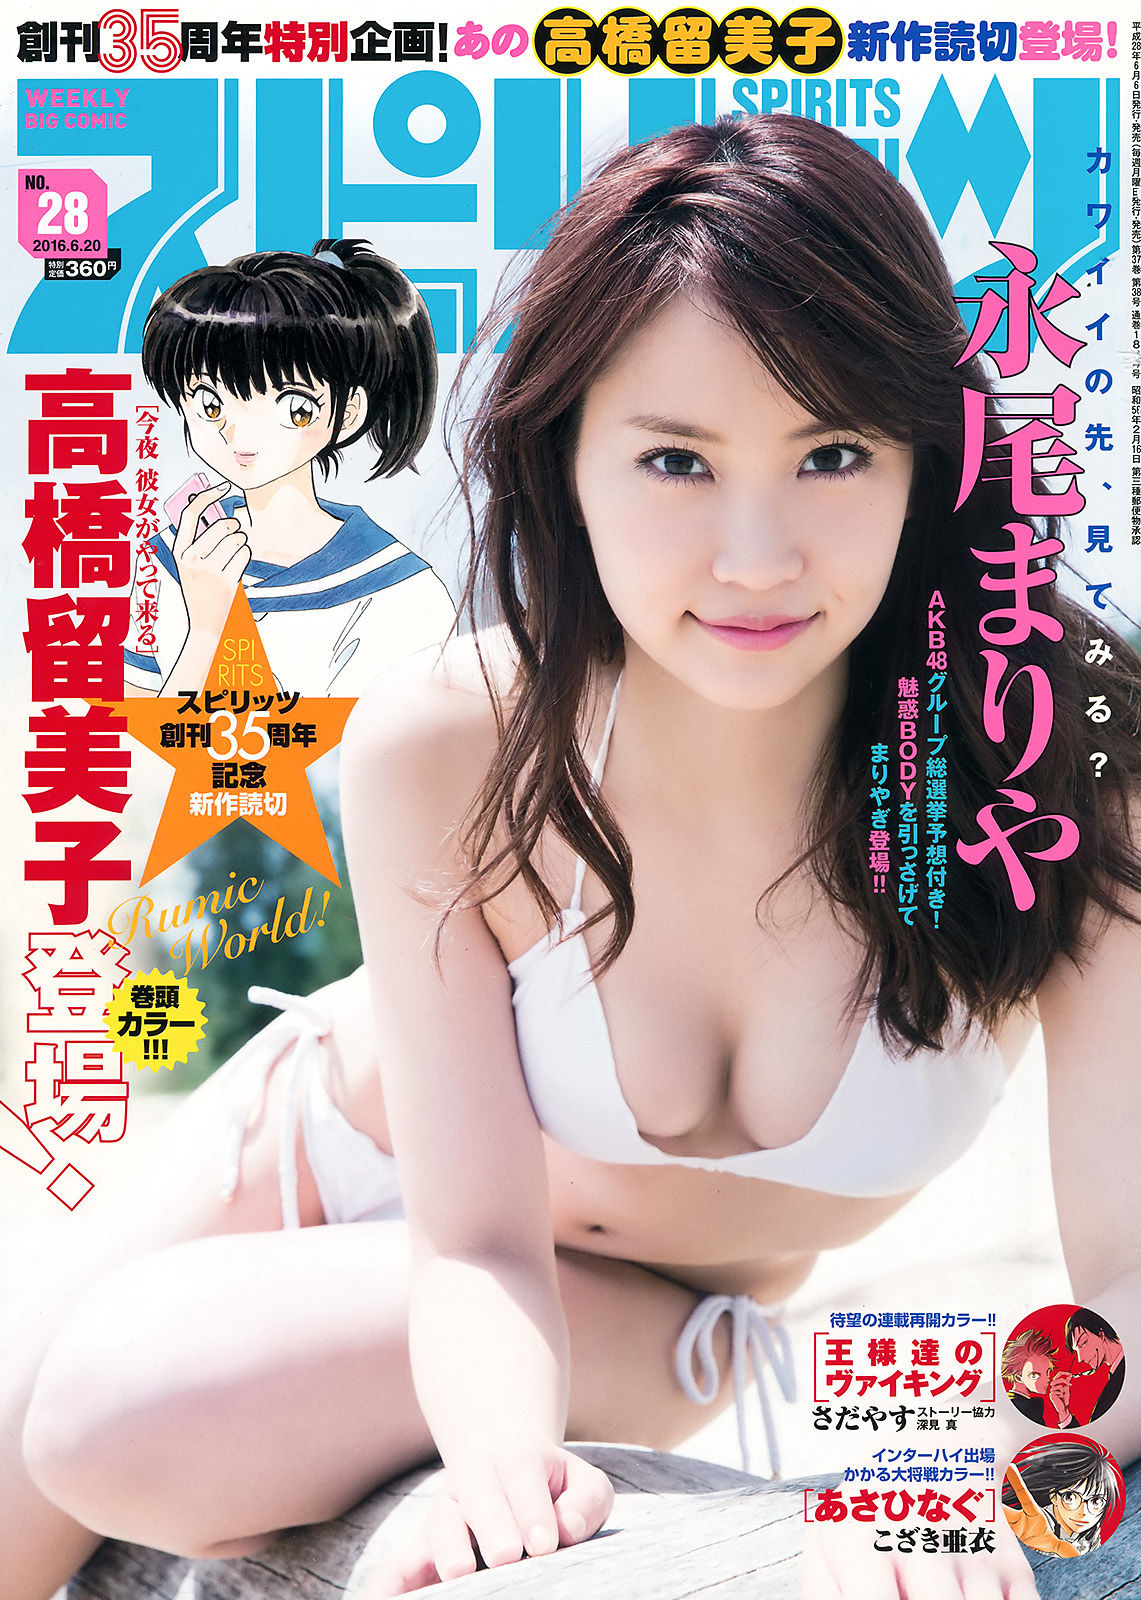 [Weekly Big Comic Spirits]美胸日本女星:永尾玛利亚(永尾まりや)高品质私房写真在线浏览(7P)